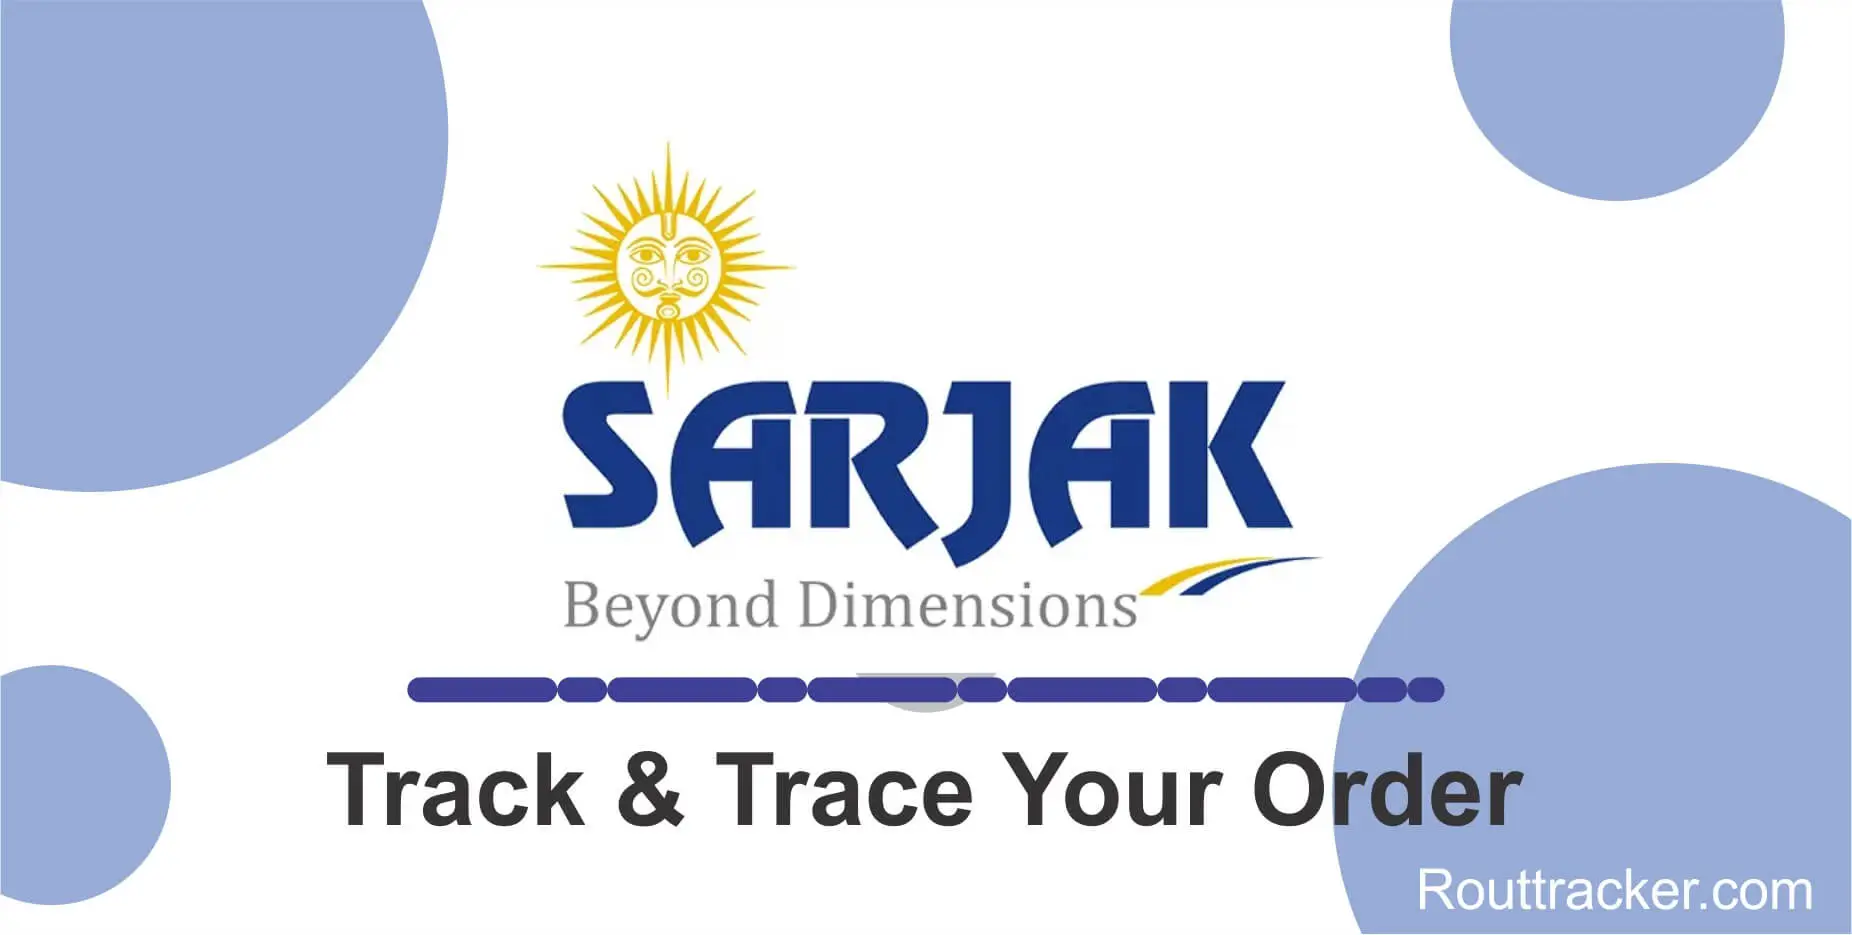 Sarjak Tracking